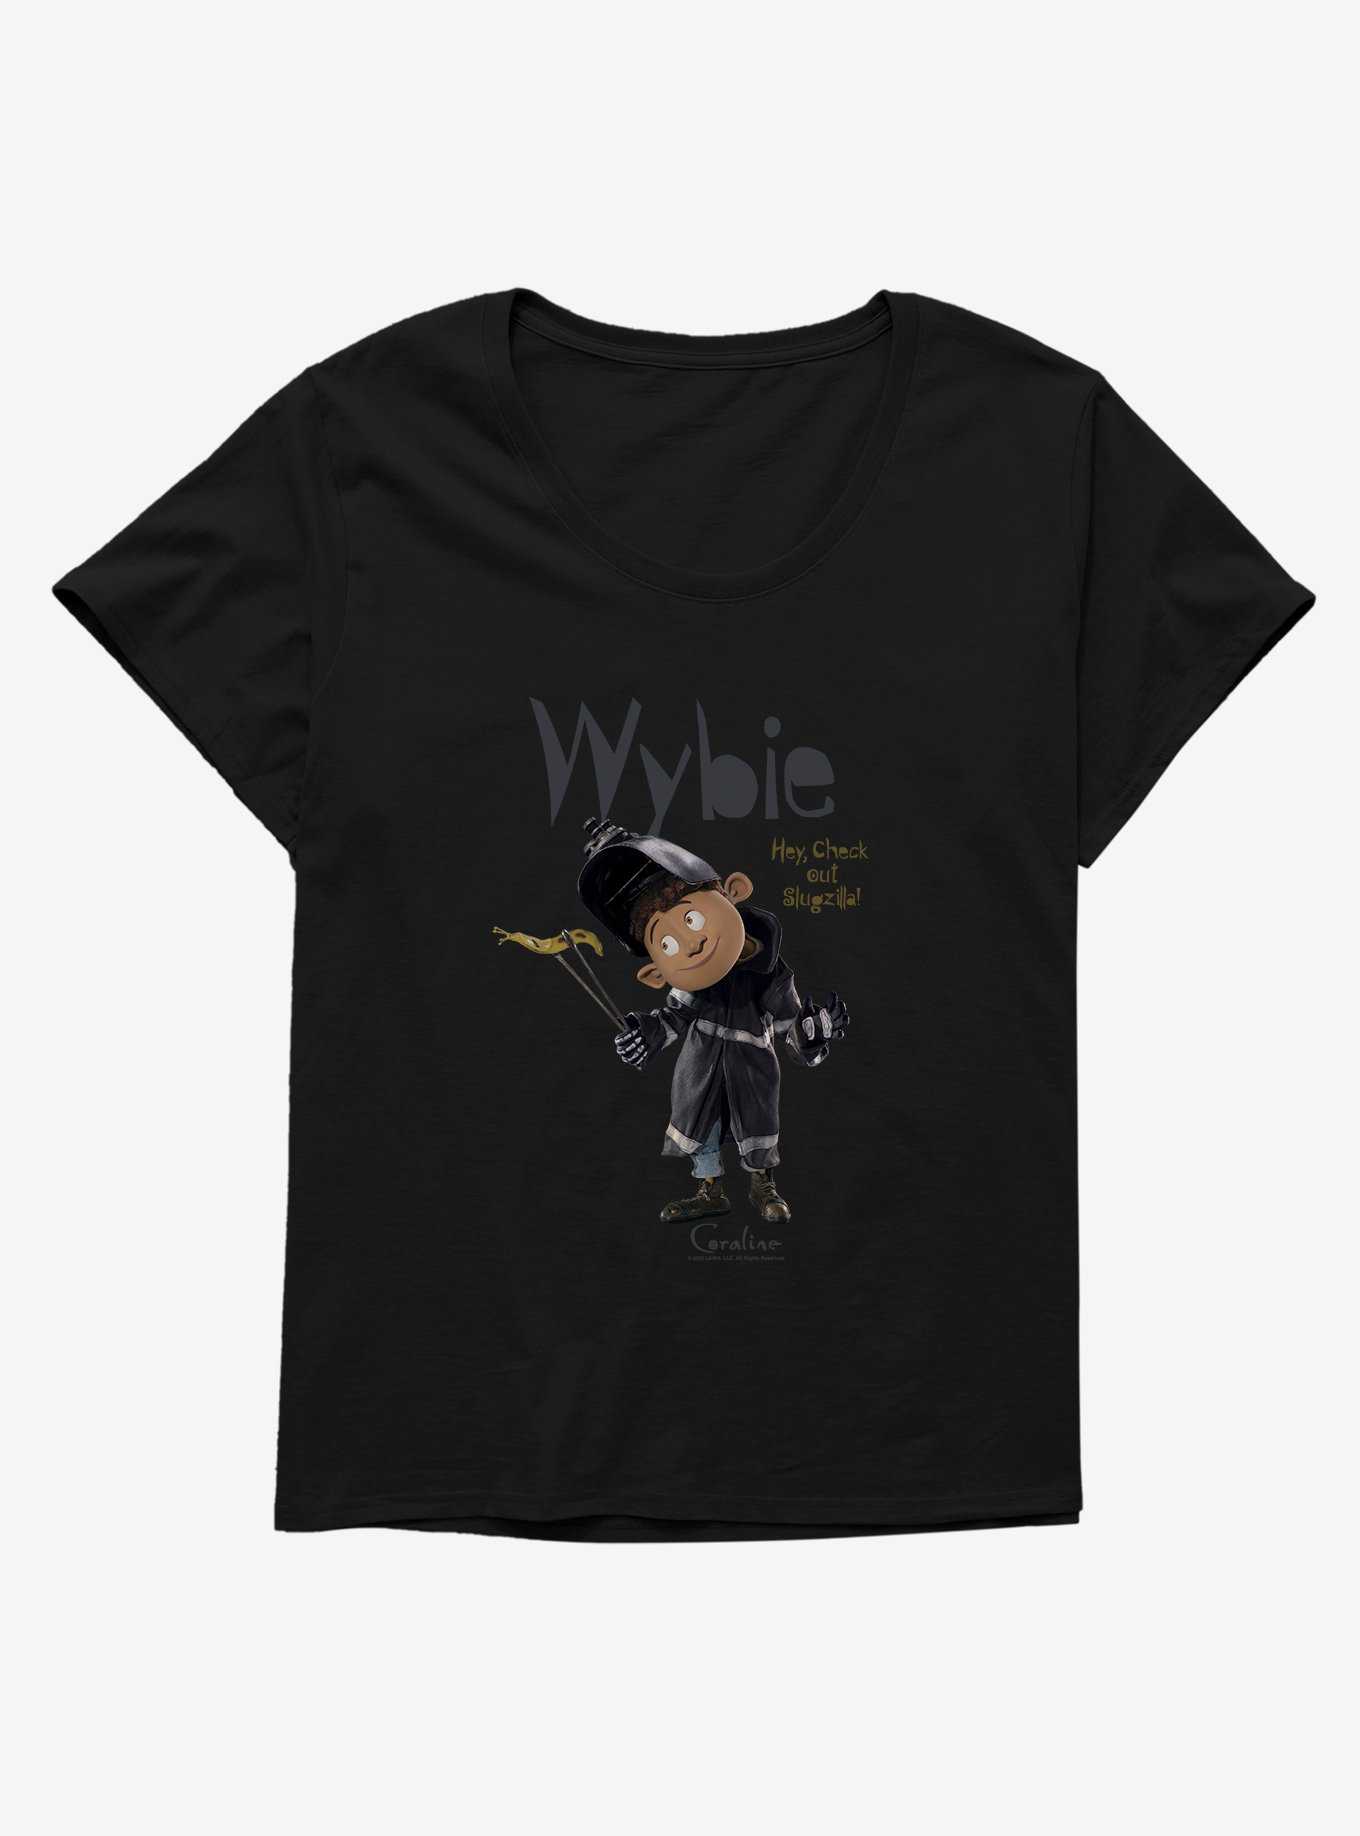 Coraline Wybie Womens T-Shirt Plus Size, , hi-res